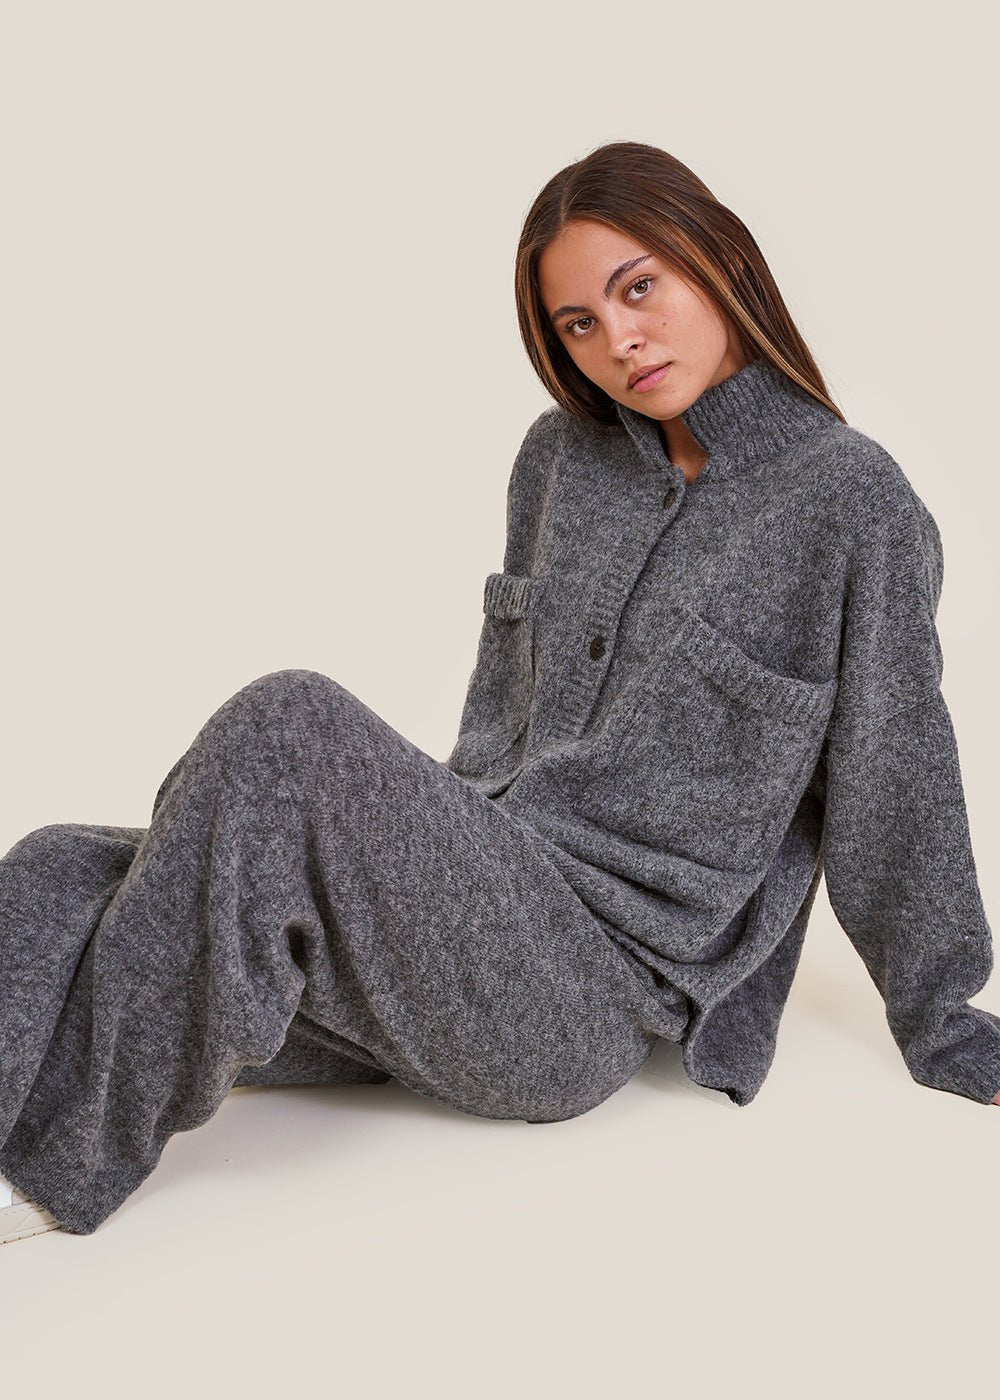 Baby Alpaca Knit Pants in Grey by CORDERA – New Classics Studios